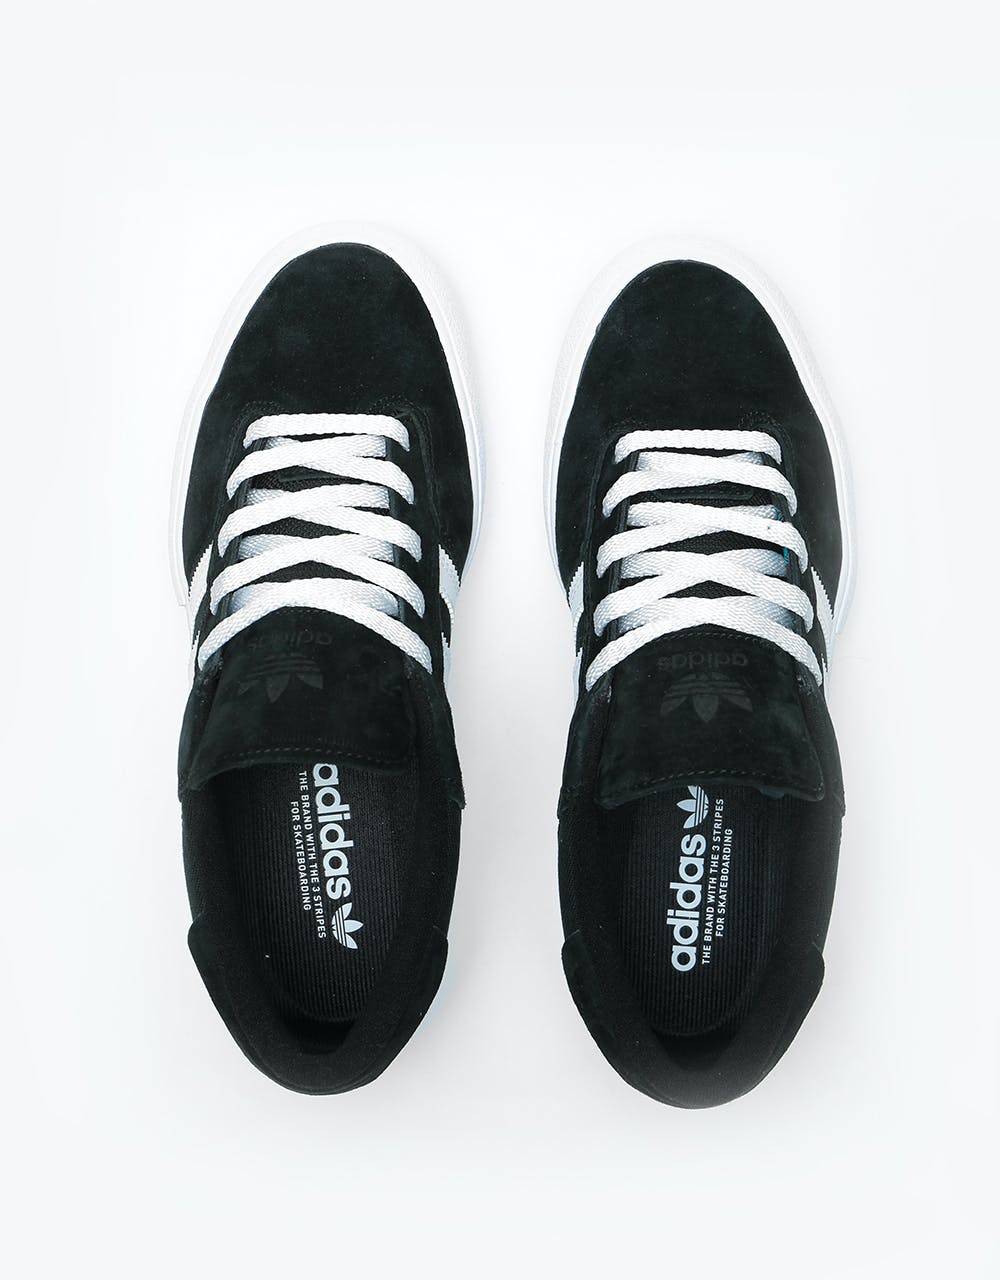 Adidas Matchbreak Super Skate Shoes - Core Black/White/Gold Metallic